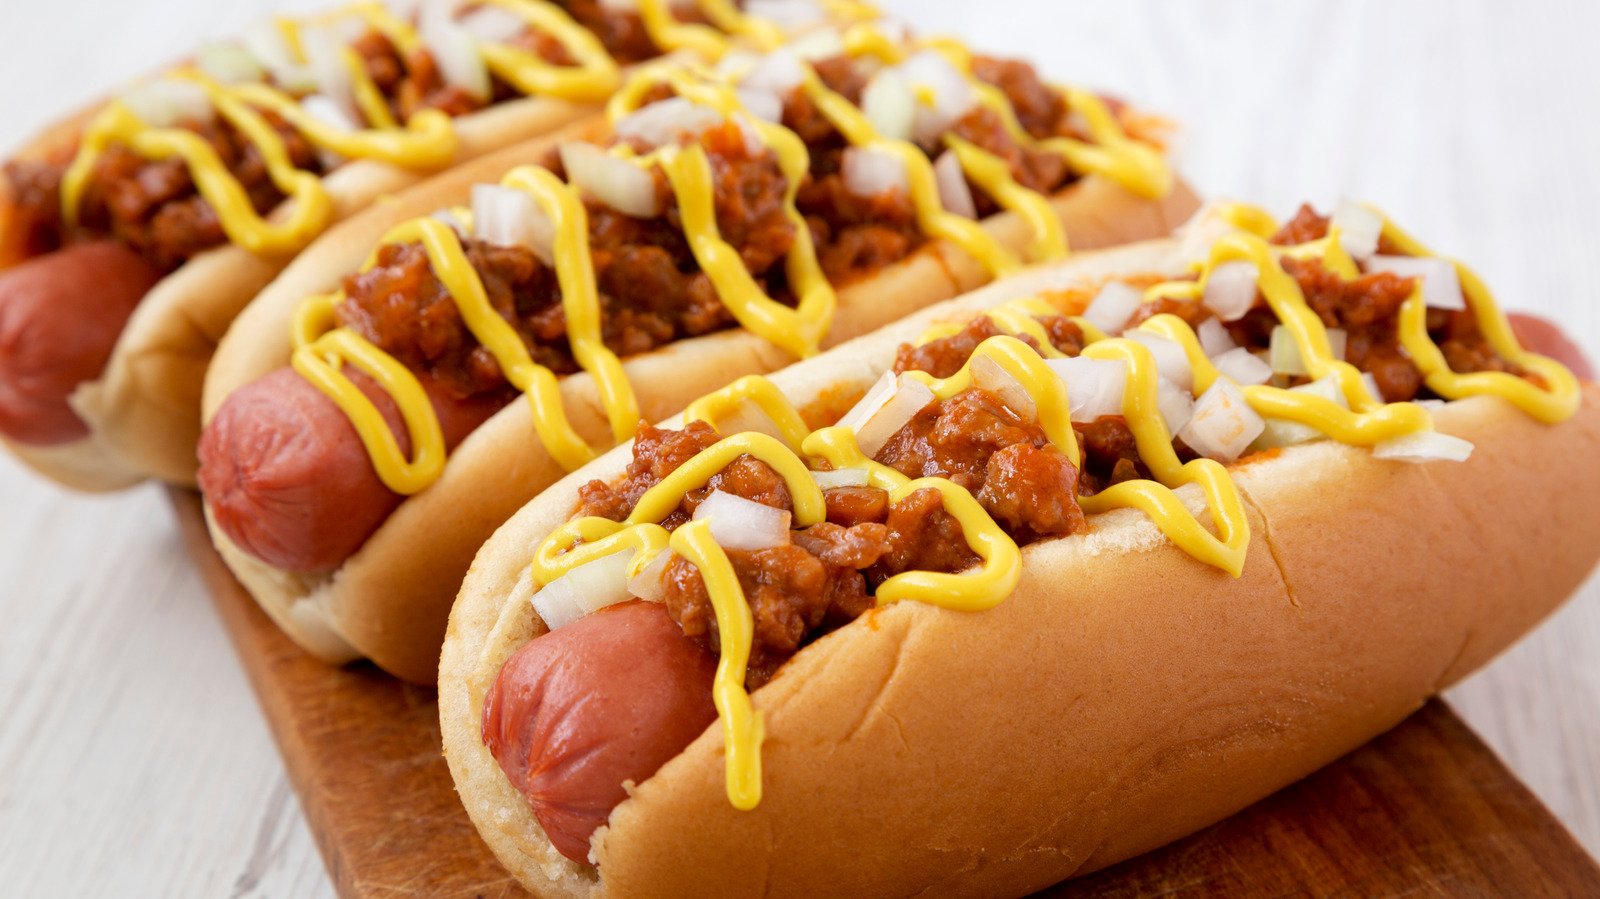 What Makes The Detroit Coney Hot Dog So Unique?